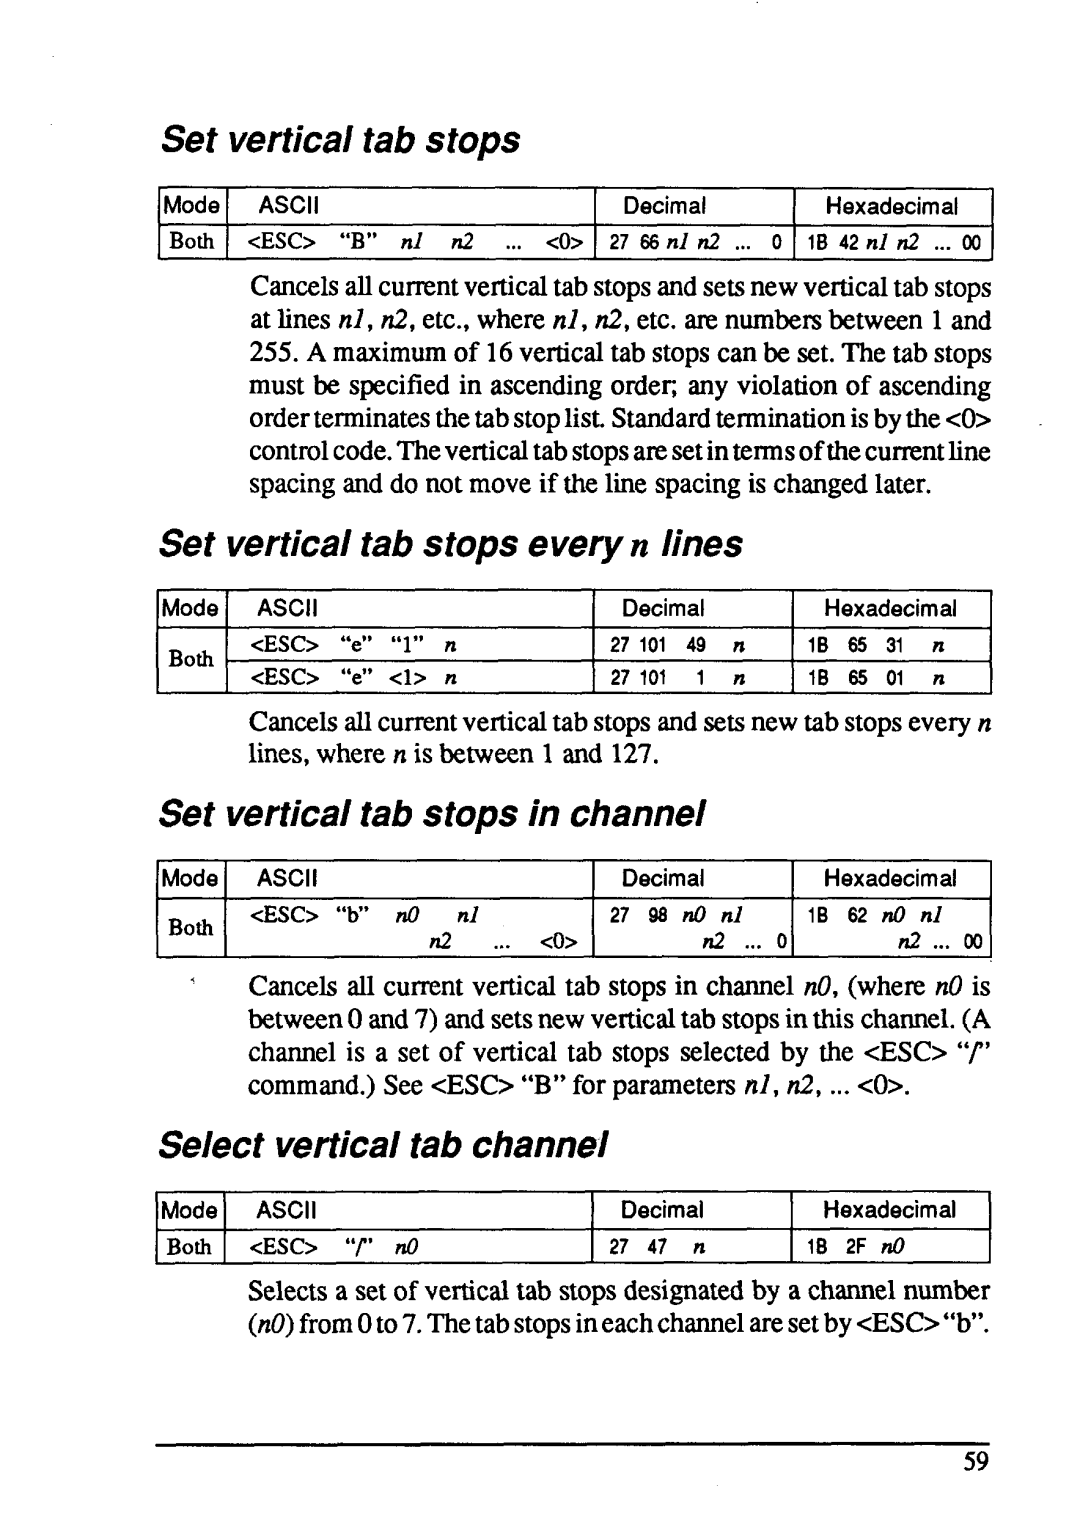 Star Micronics LC24-15 Set vertical tab stops evetyn lines, Set vertical tab stops in channel, Mode, Ascii, Decimal 